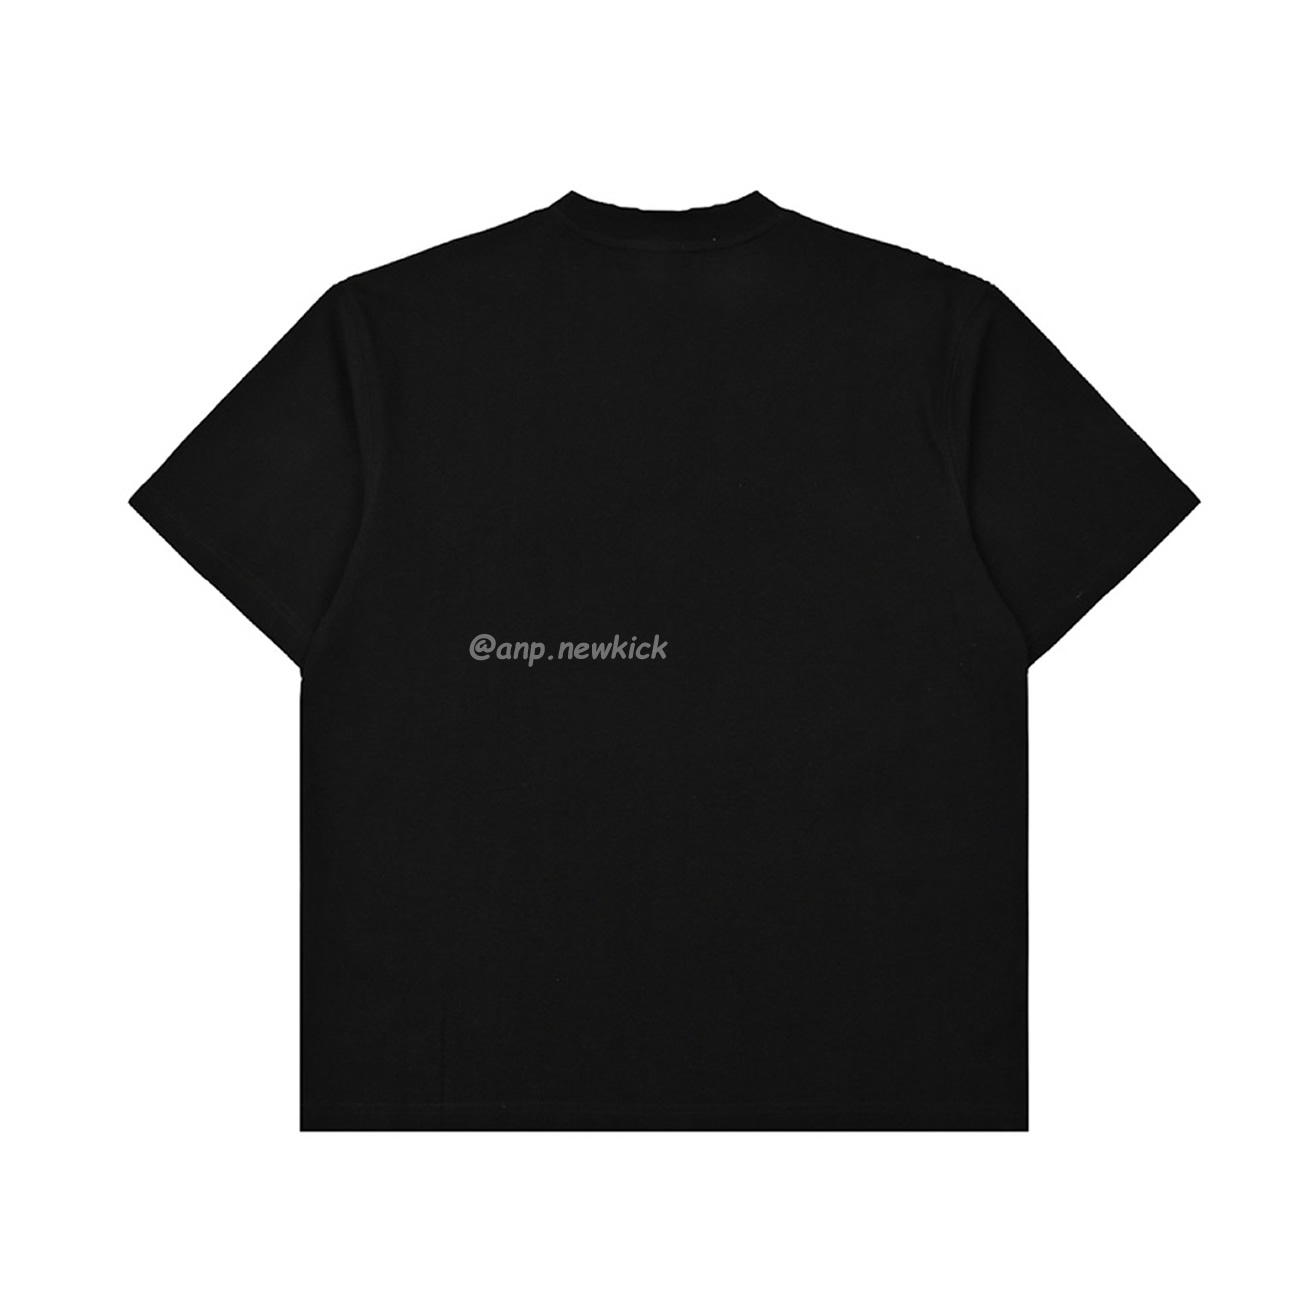 Welldone Letter Printing Black White T Shirt (2) - newkick.org